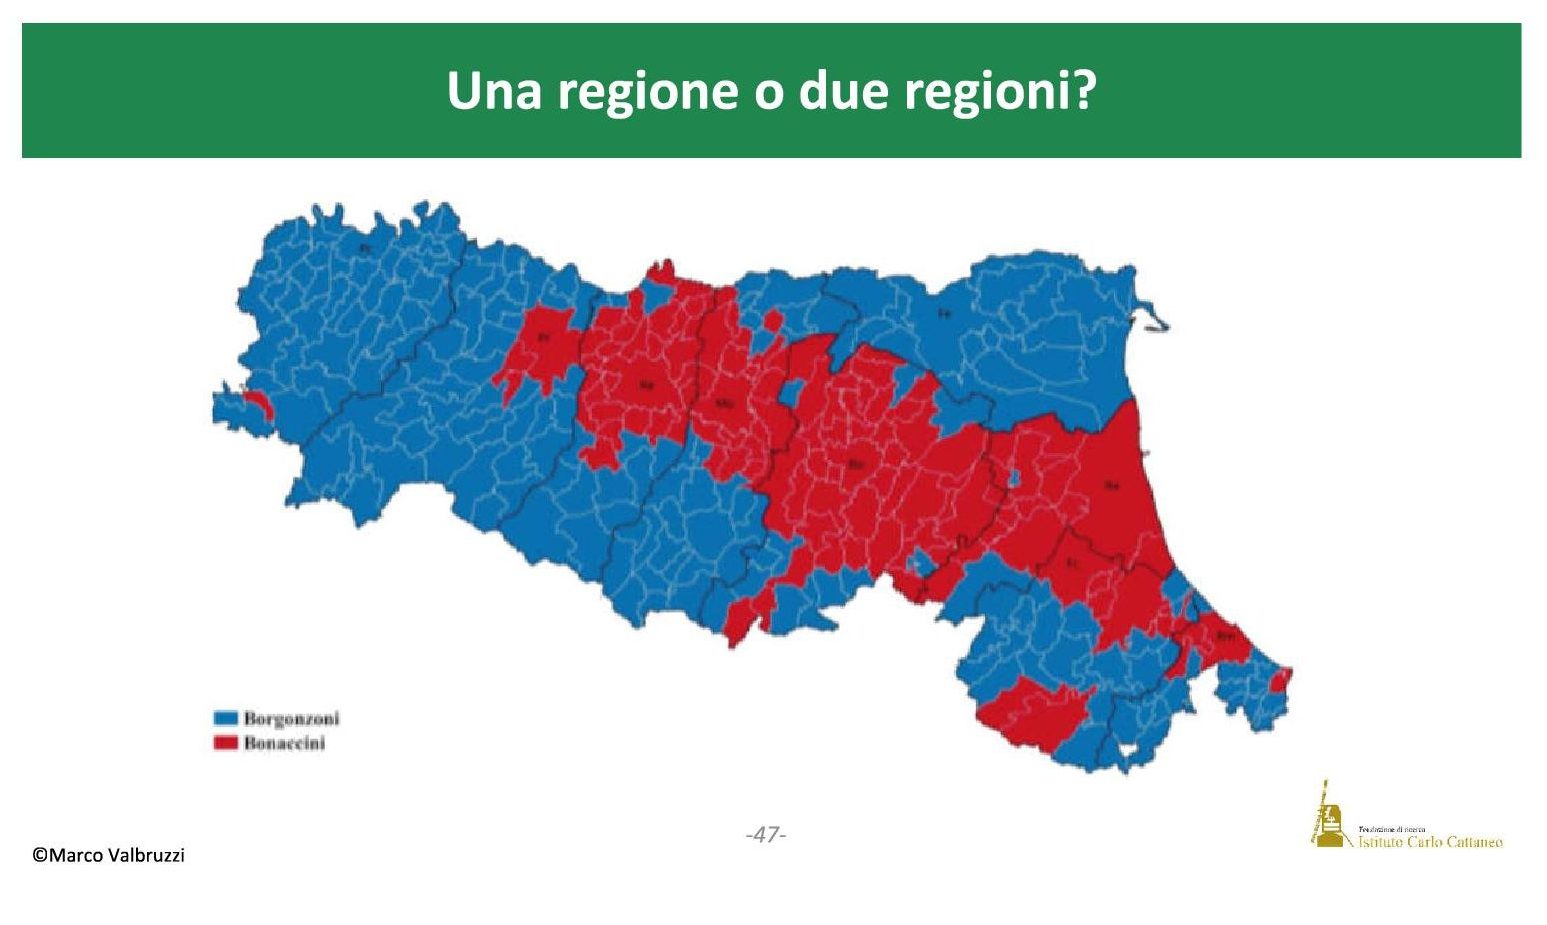 Una regione o due regioni?